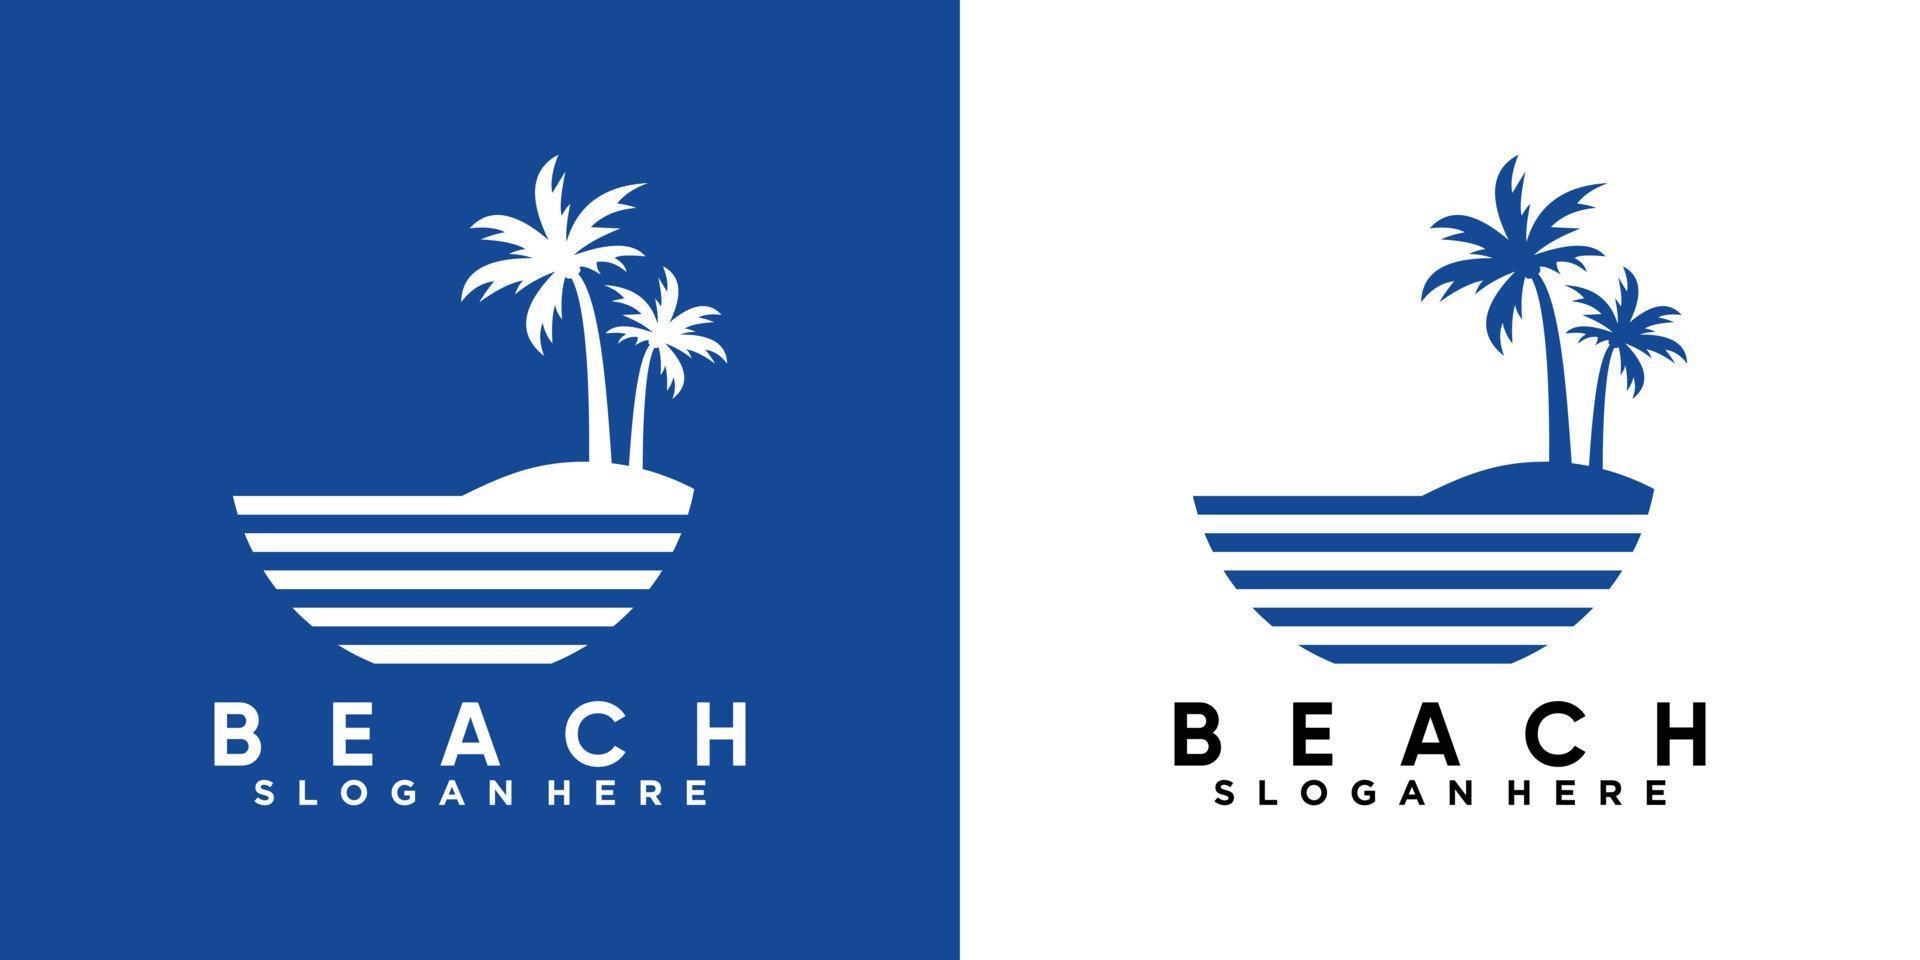 beach logo design with style and creative concept vector